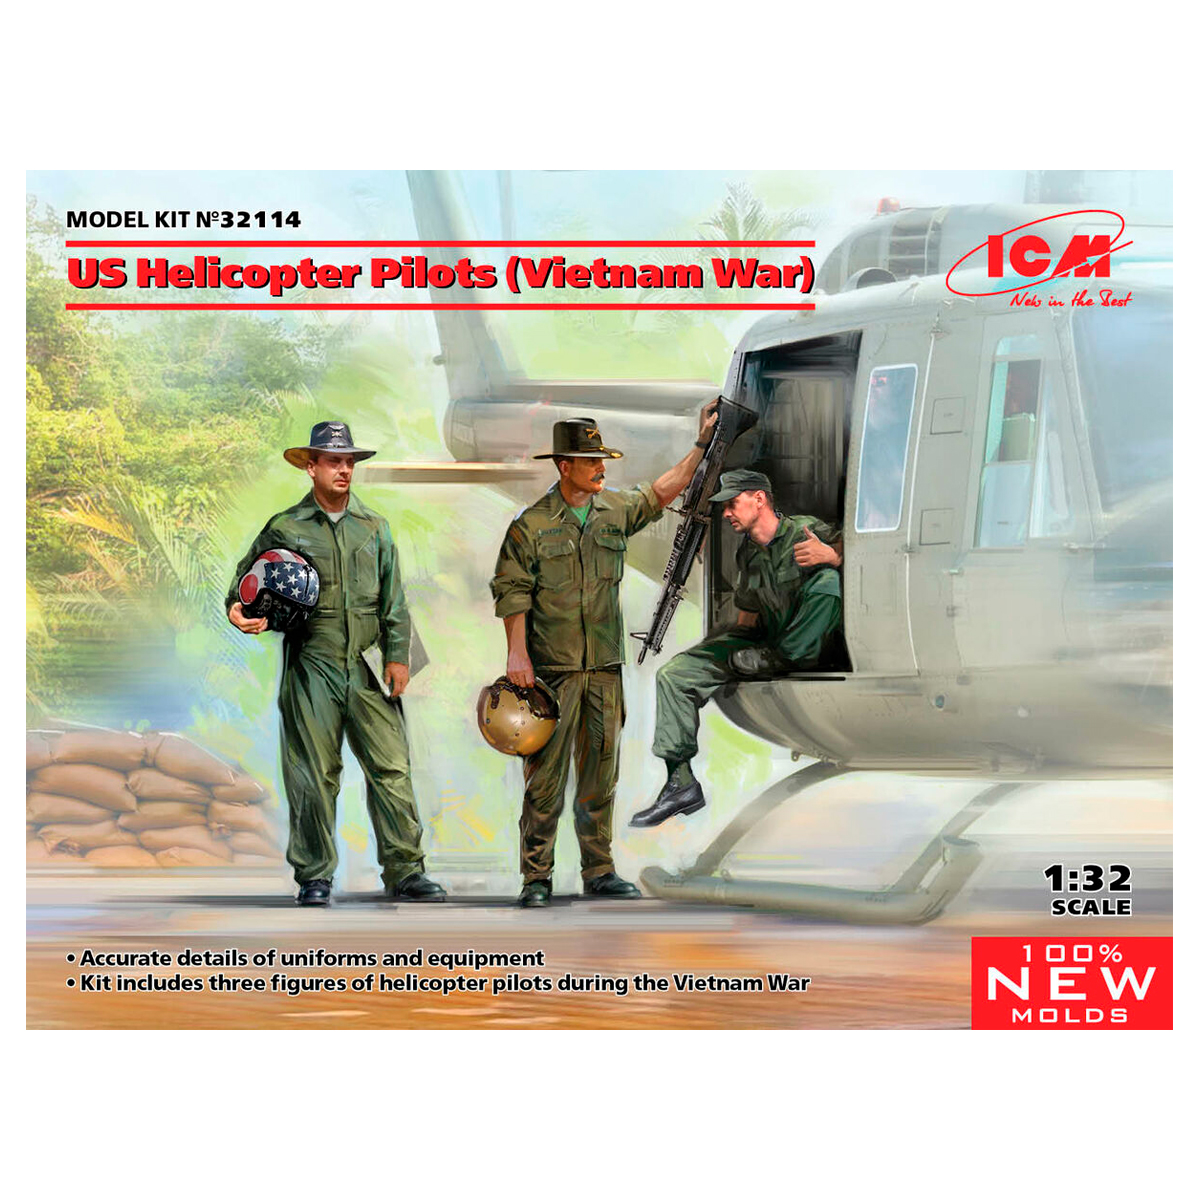 US Helicopter Pilots (Vietnam War)  (100% new molds) 1/32